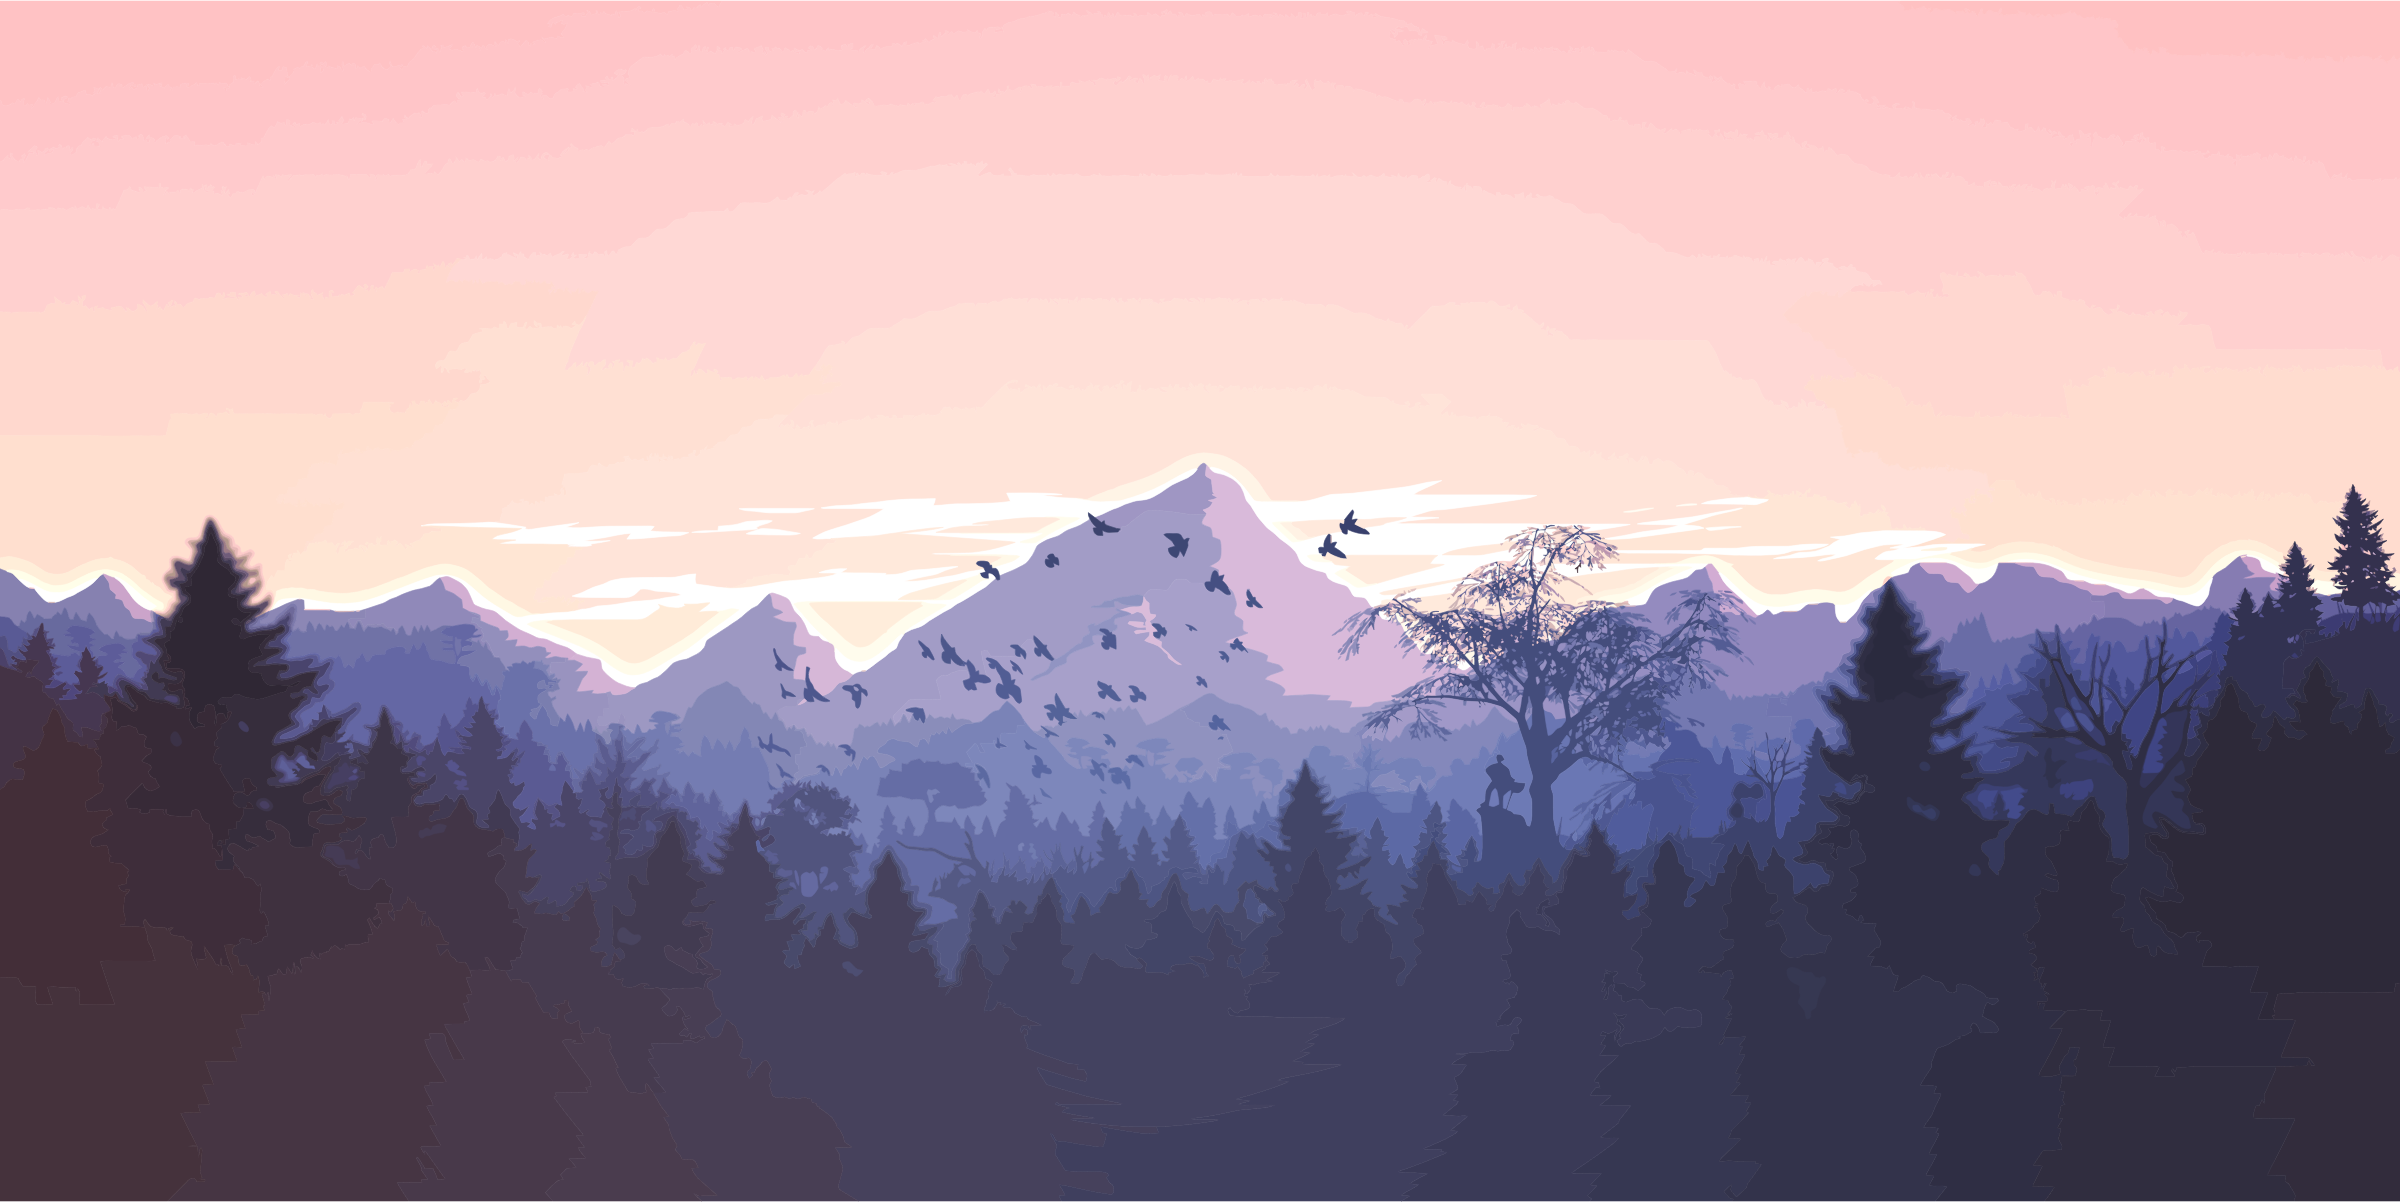 Forrest And Mountains Illustration. Fondos de pantalla bosques